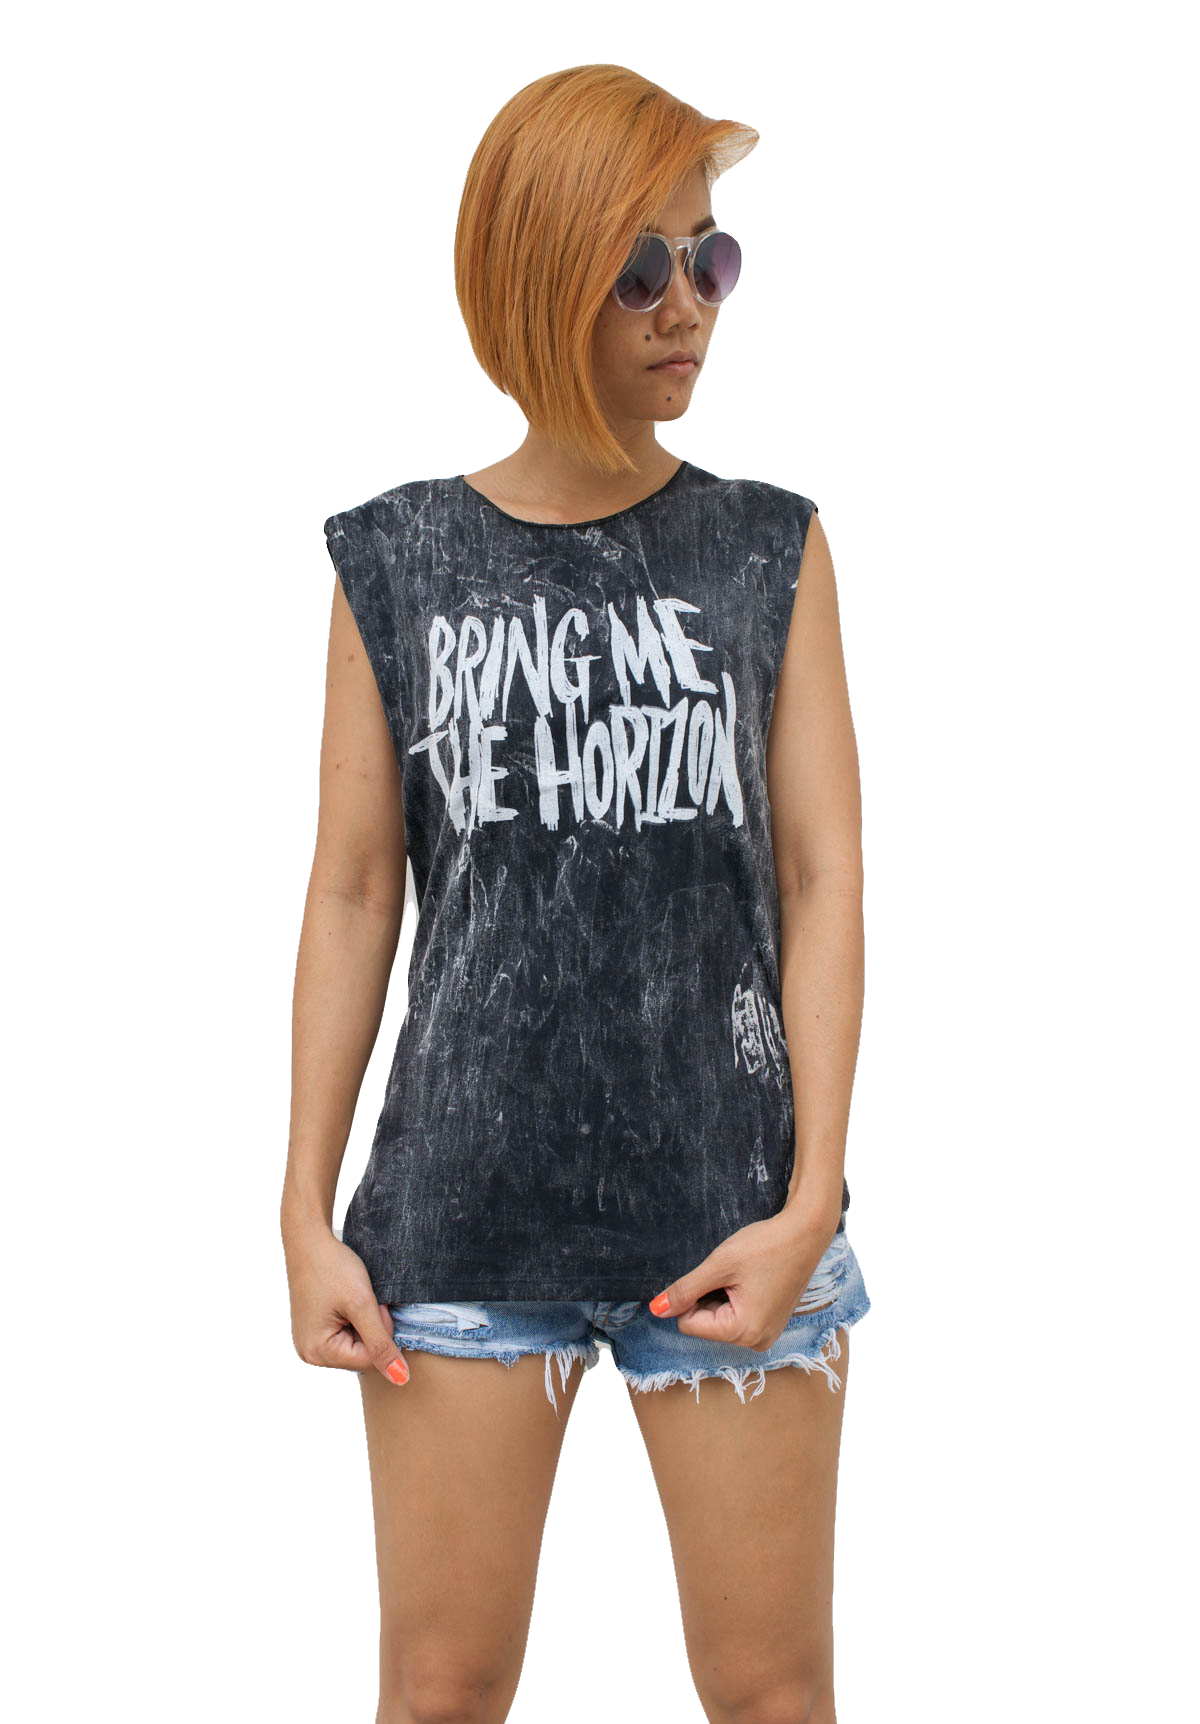 Ladies Bring Me The Horizon Vest Tank-Top Singlet Sleeveless T-Shirt